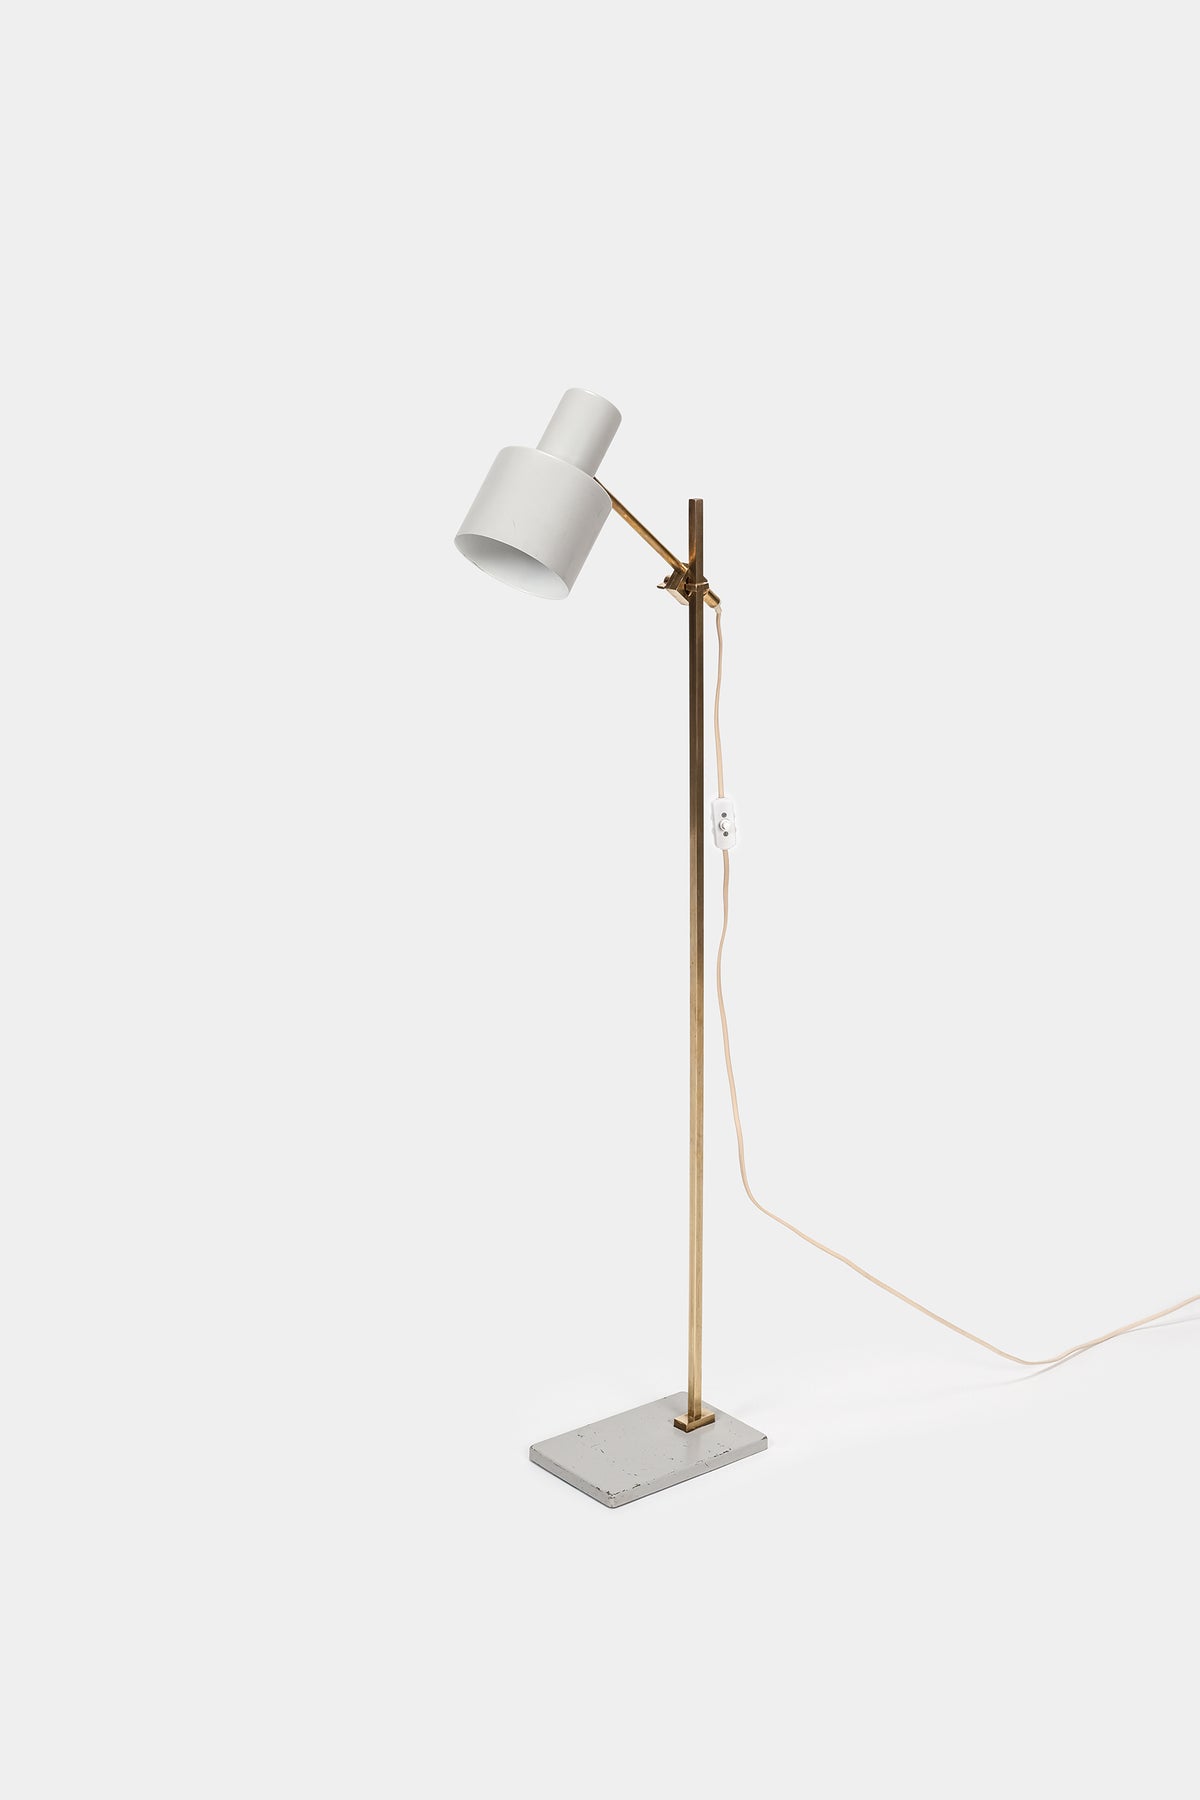 Floor Lamp with height adjustable Spot 907a, GK, Denmark, 50s